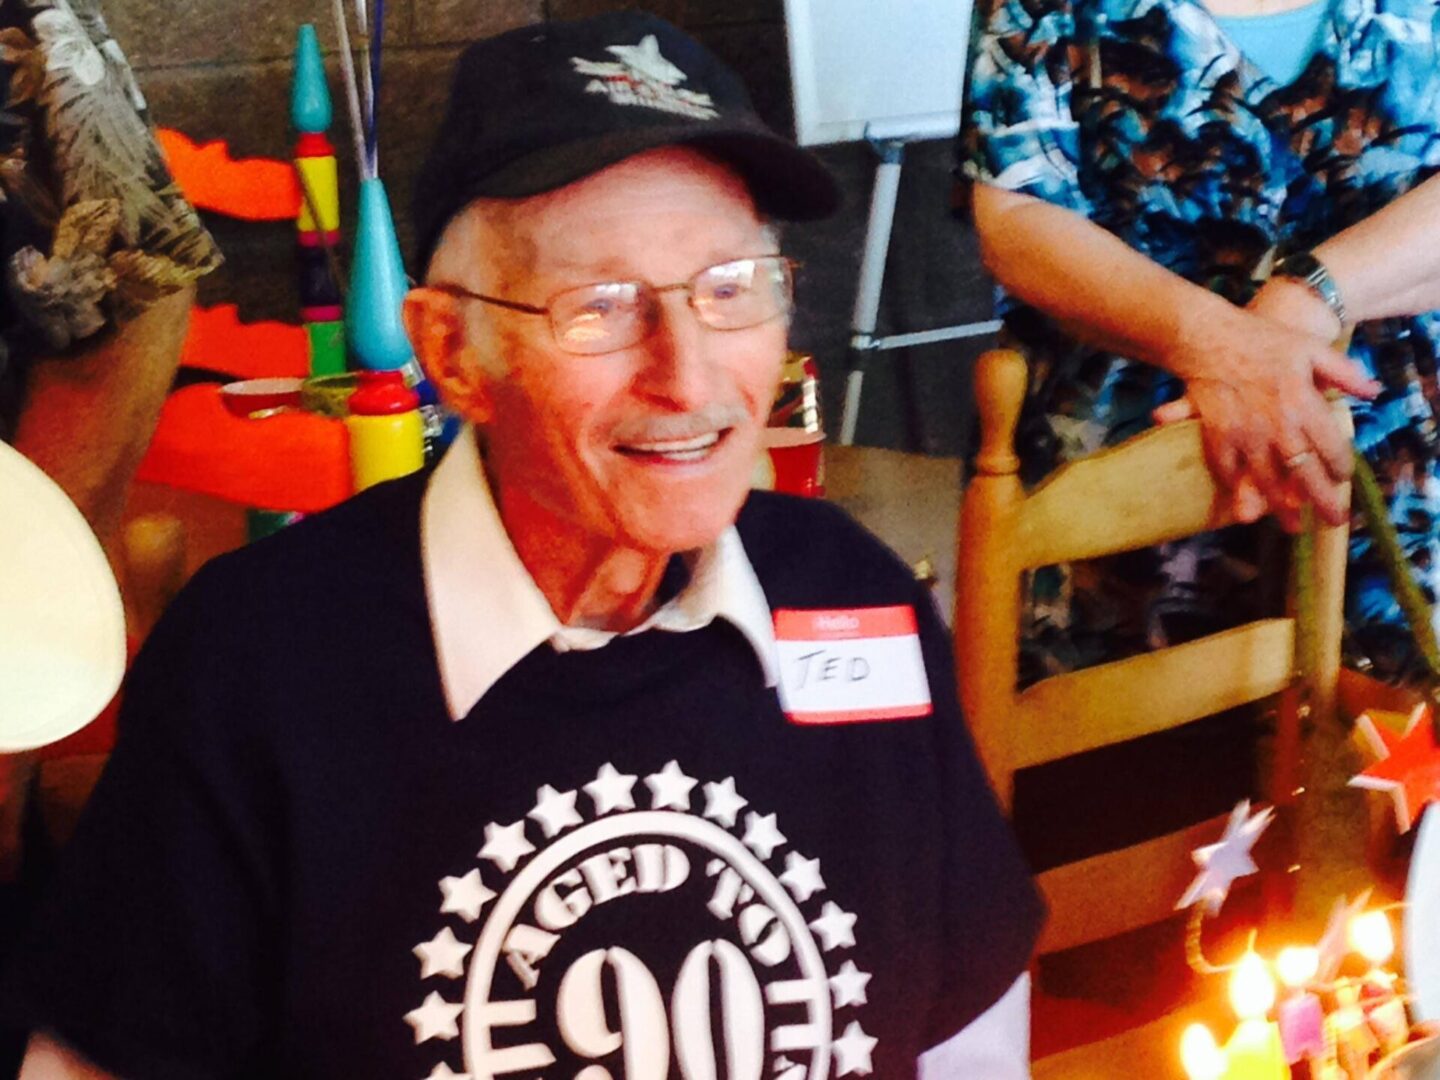 Gramps wearing his 90th birthday tee shirt